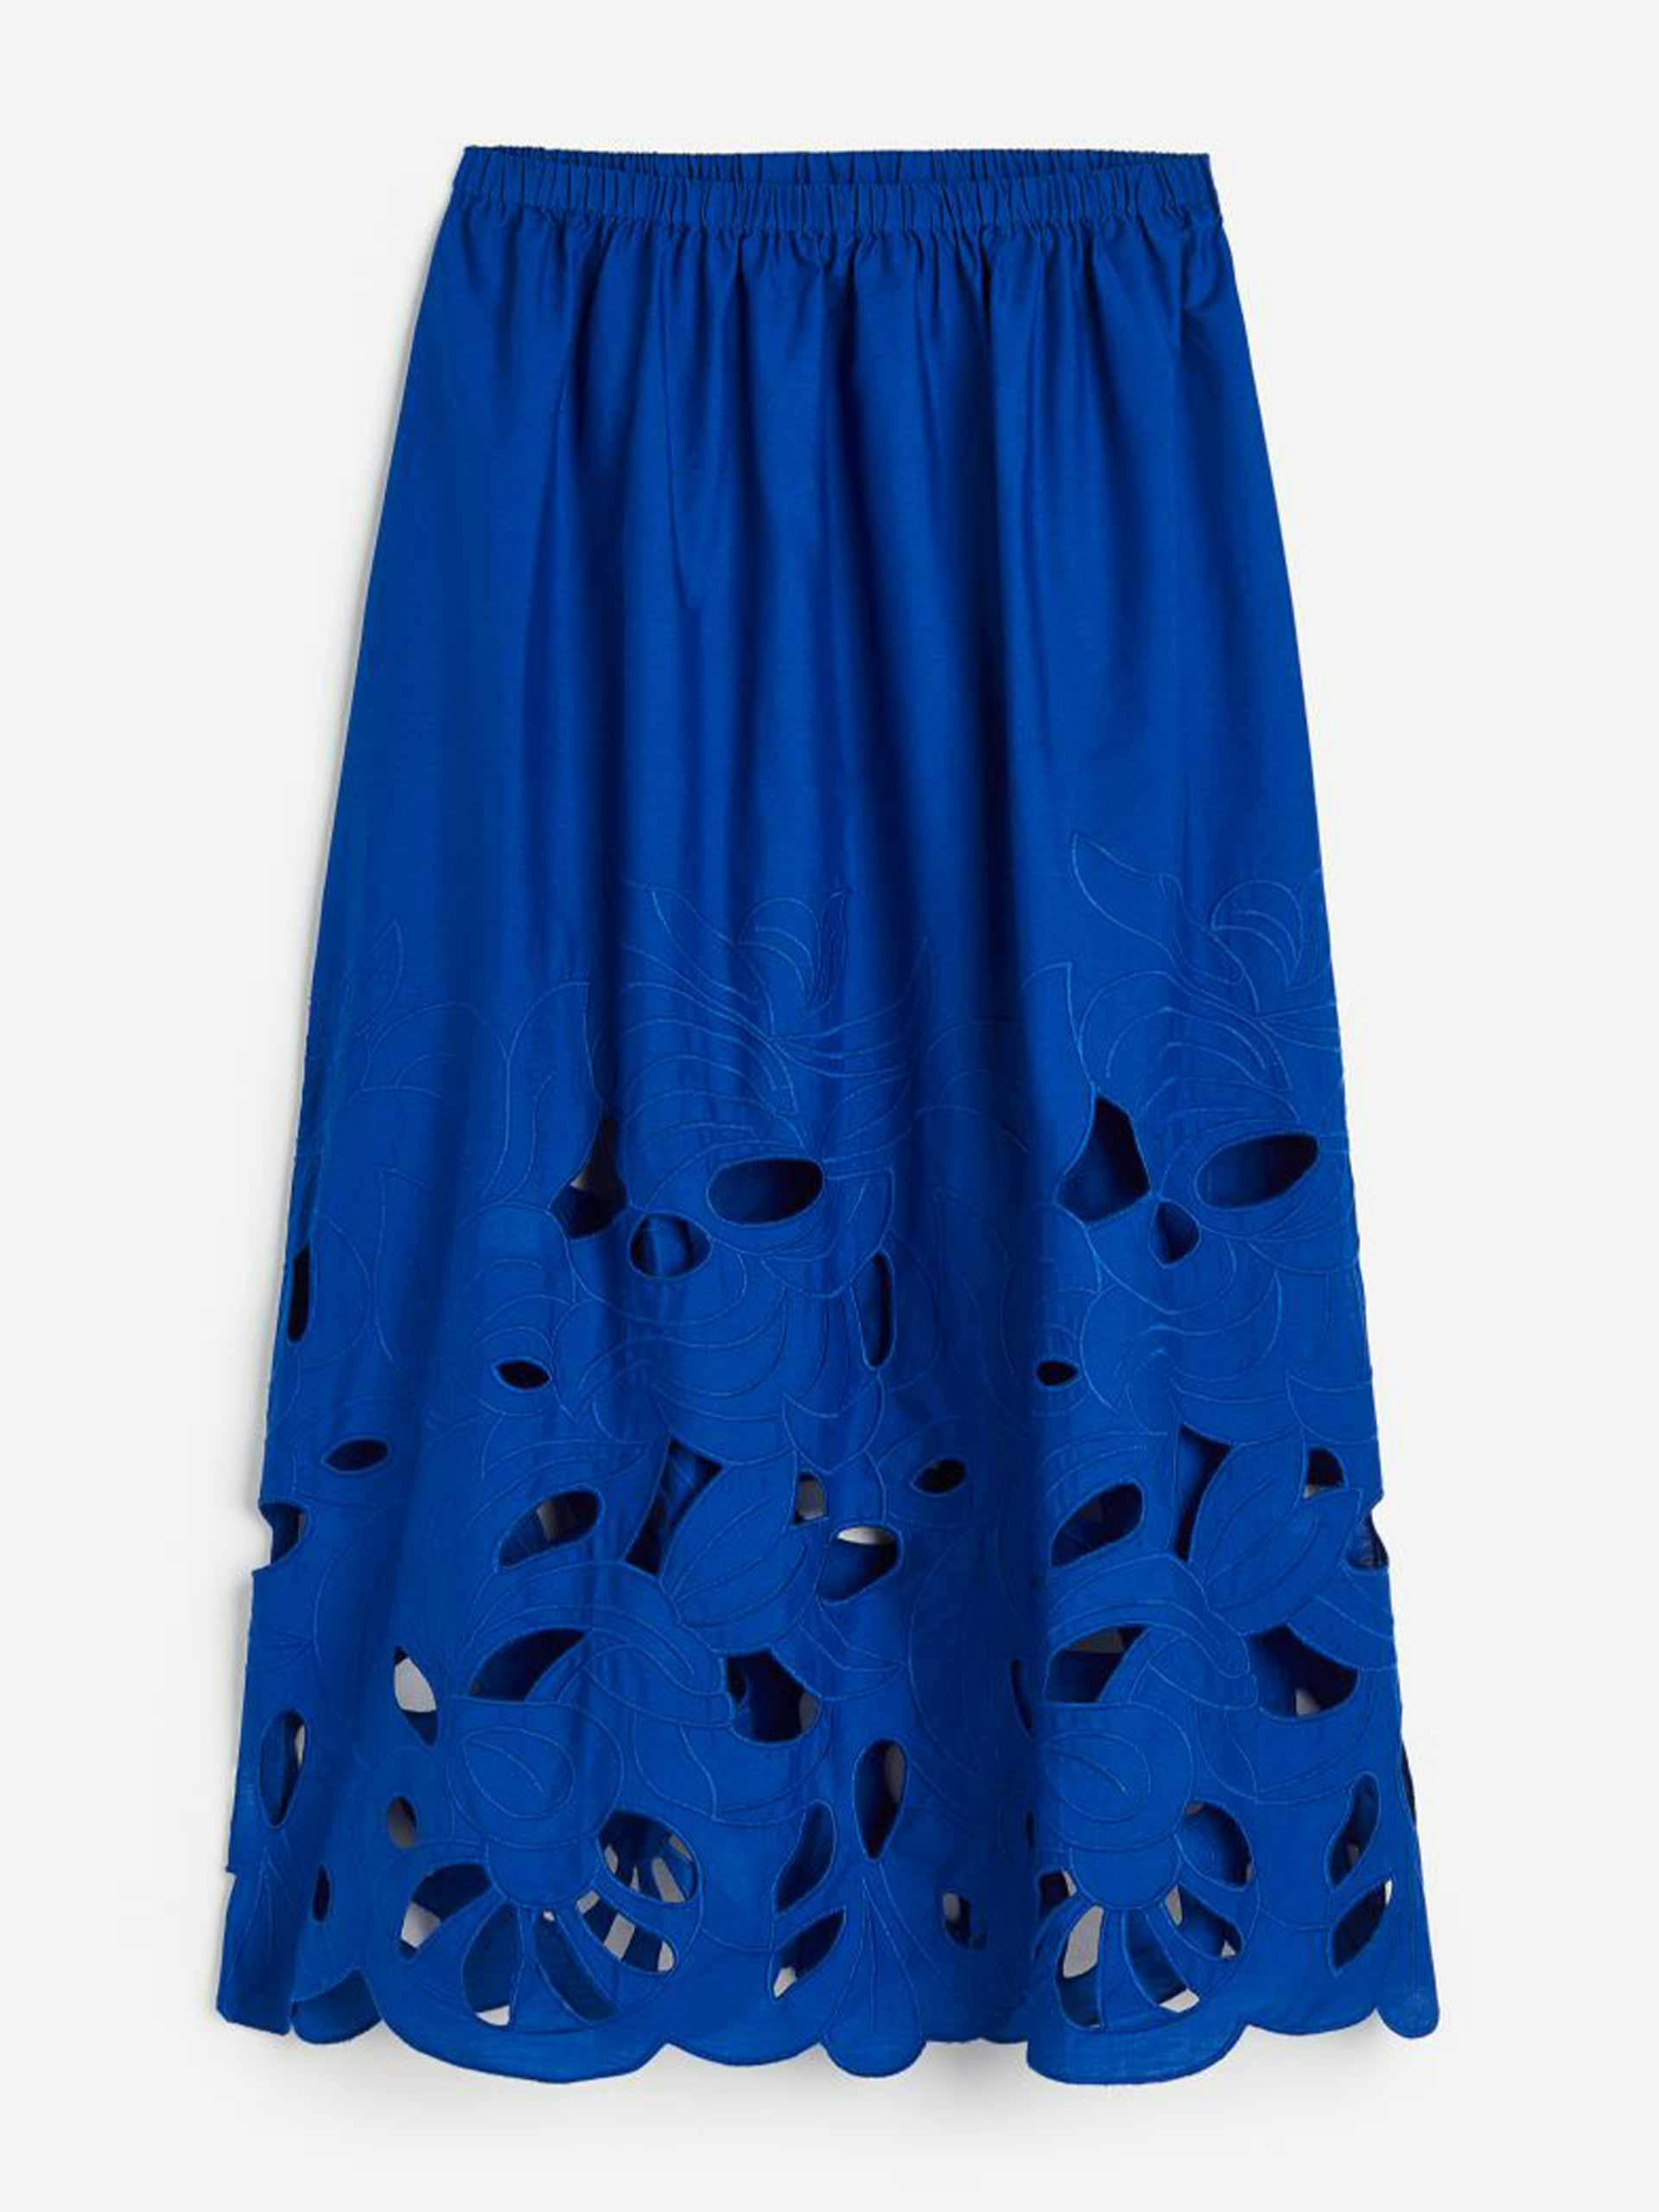 Blue embroidered skirt